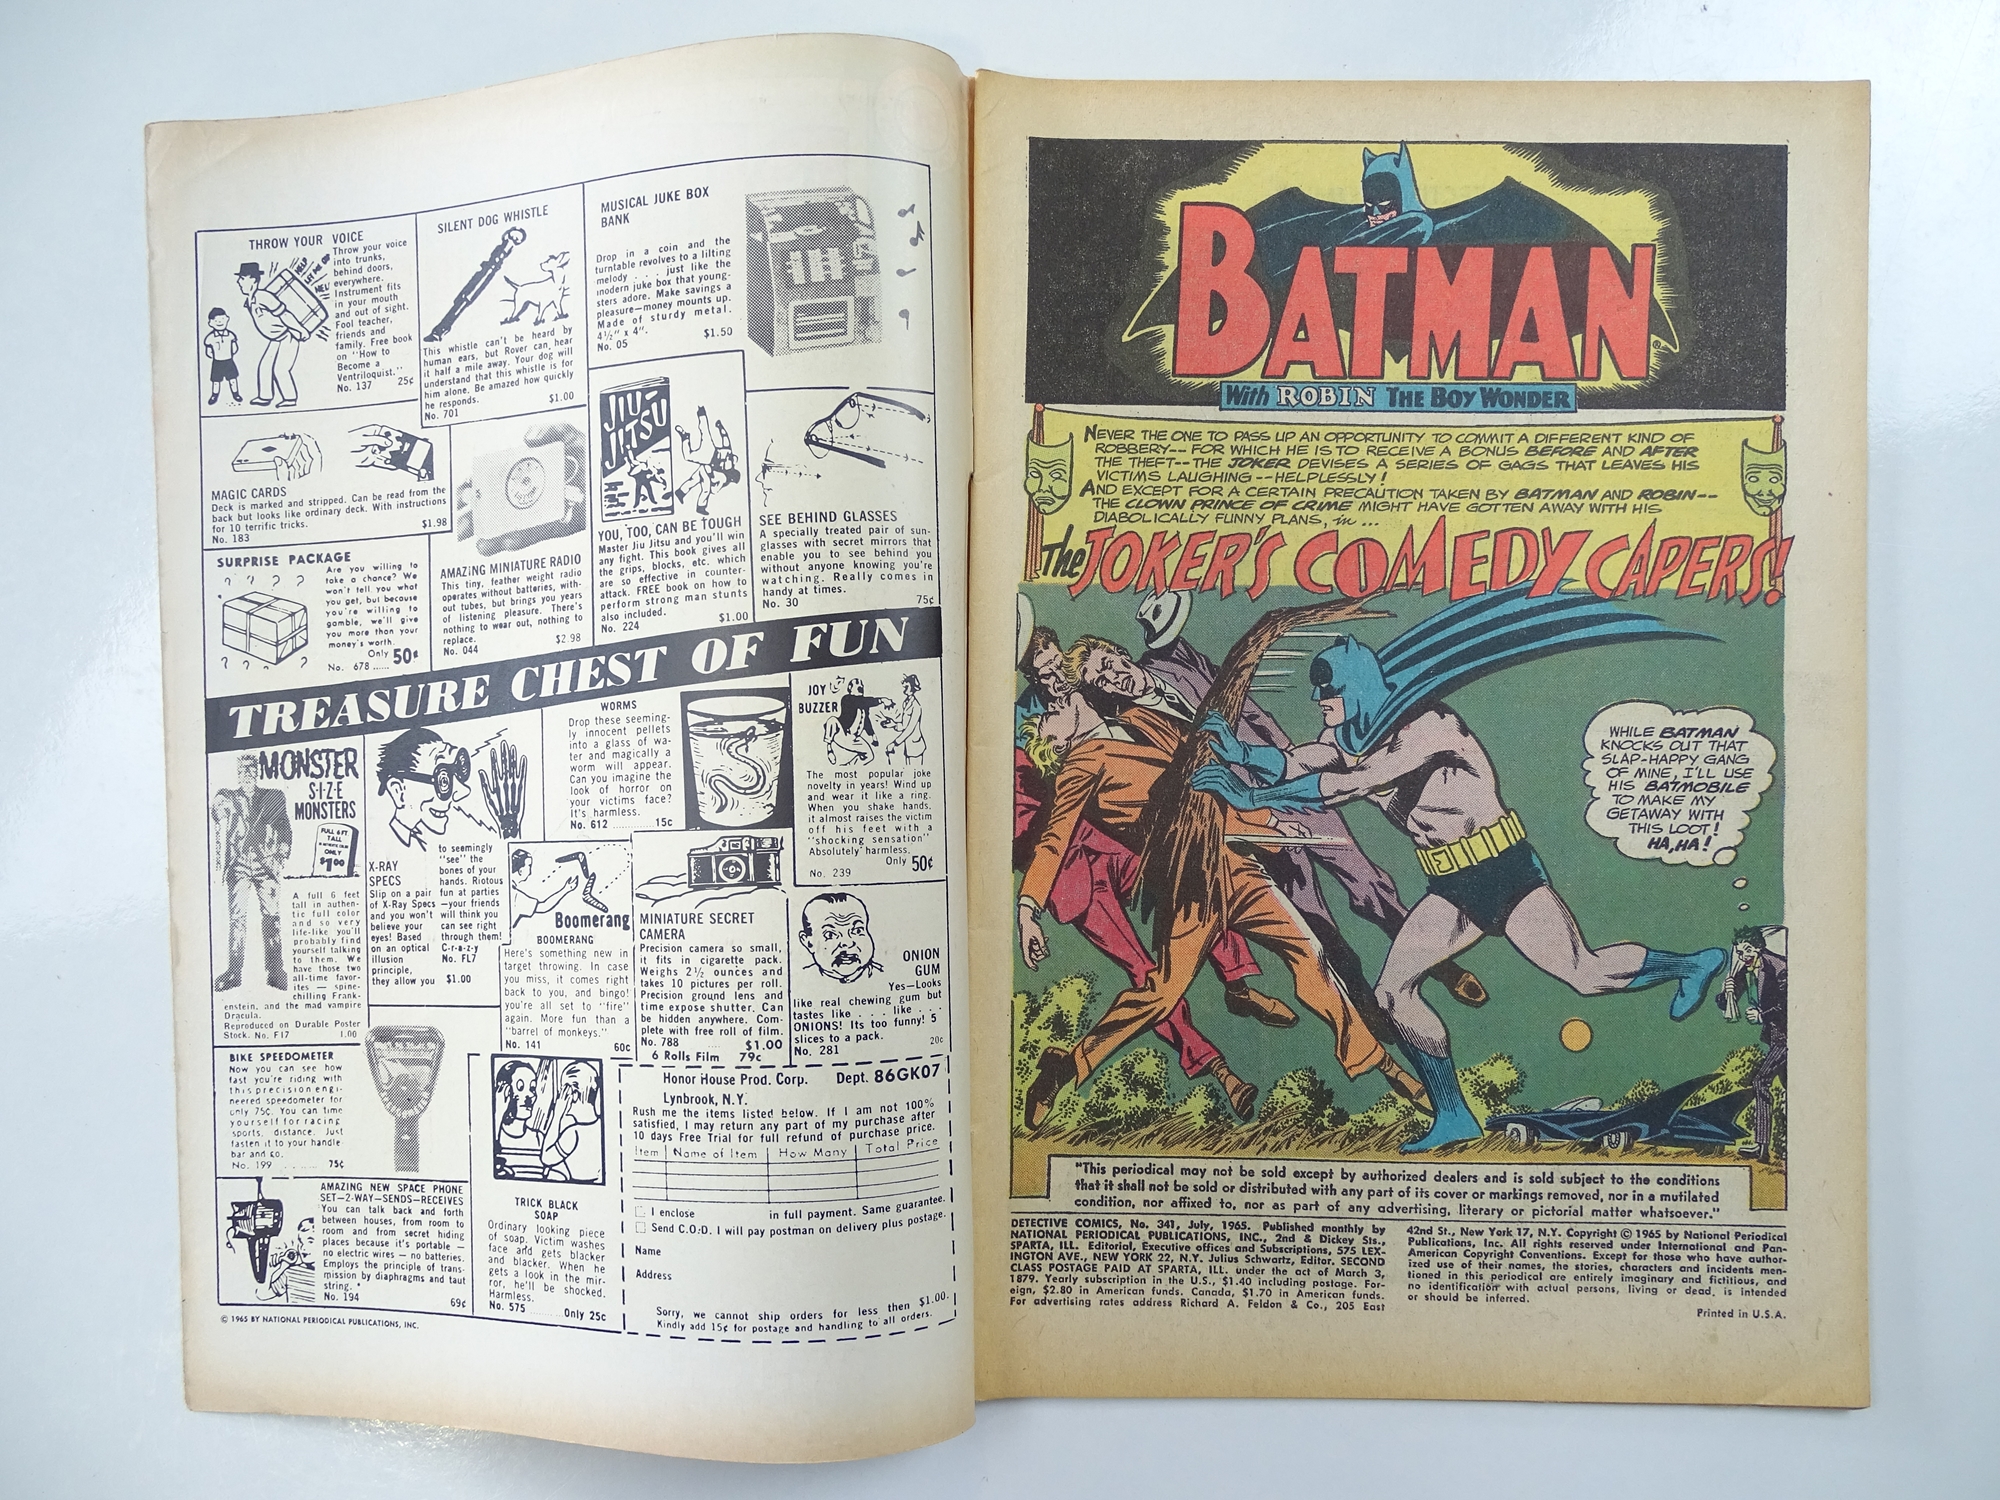 DETECTIVE COMICS: BATMAN #341 - (1965 - DC - UK Cover Price) - Joker appearance - Carmine - Image 3 of 6